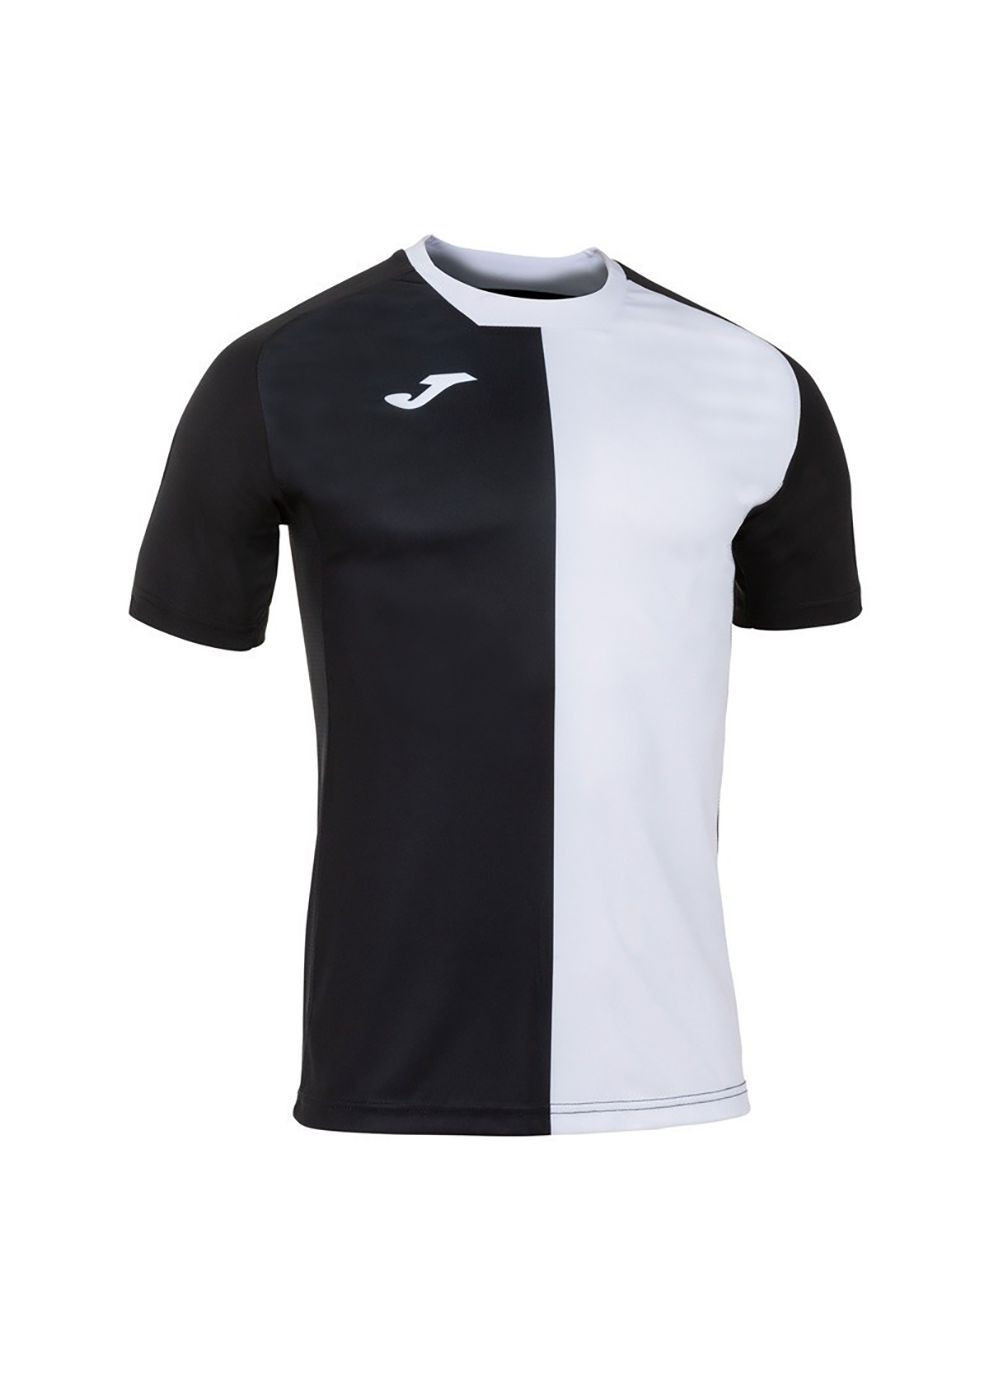 Белая футболка city t-shirt black-white s/s черный,белый-3xl Joma